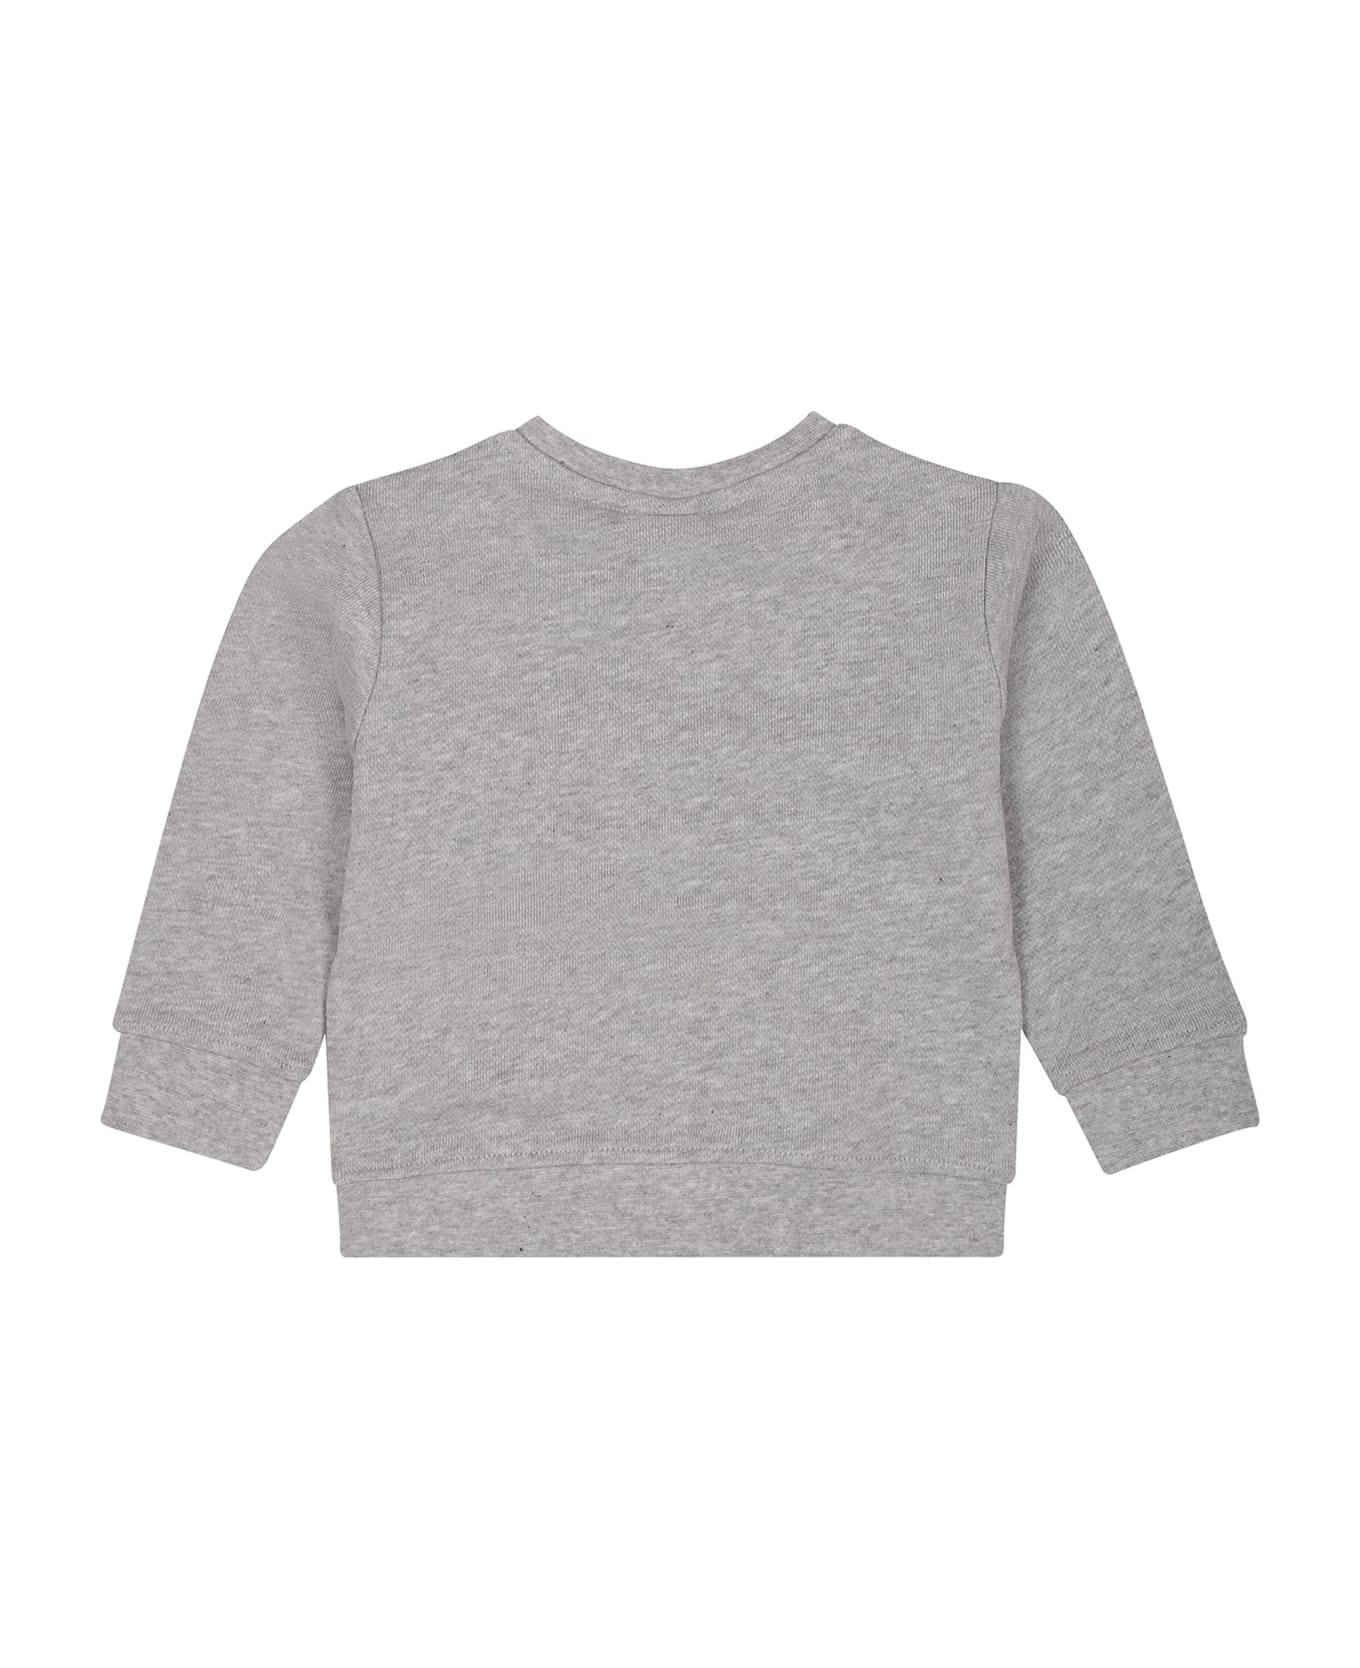 Stella McCartney Kids Grey Sweatshirt For Baby Boy With Hamburger Print - Grey